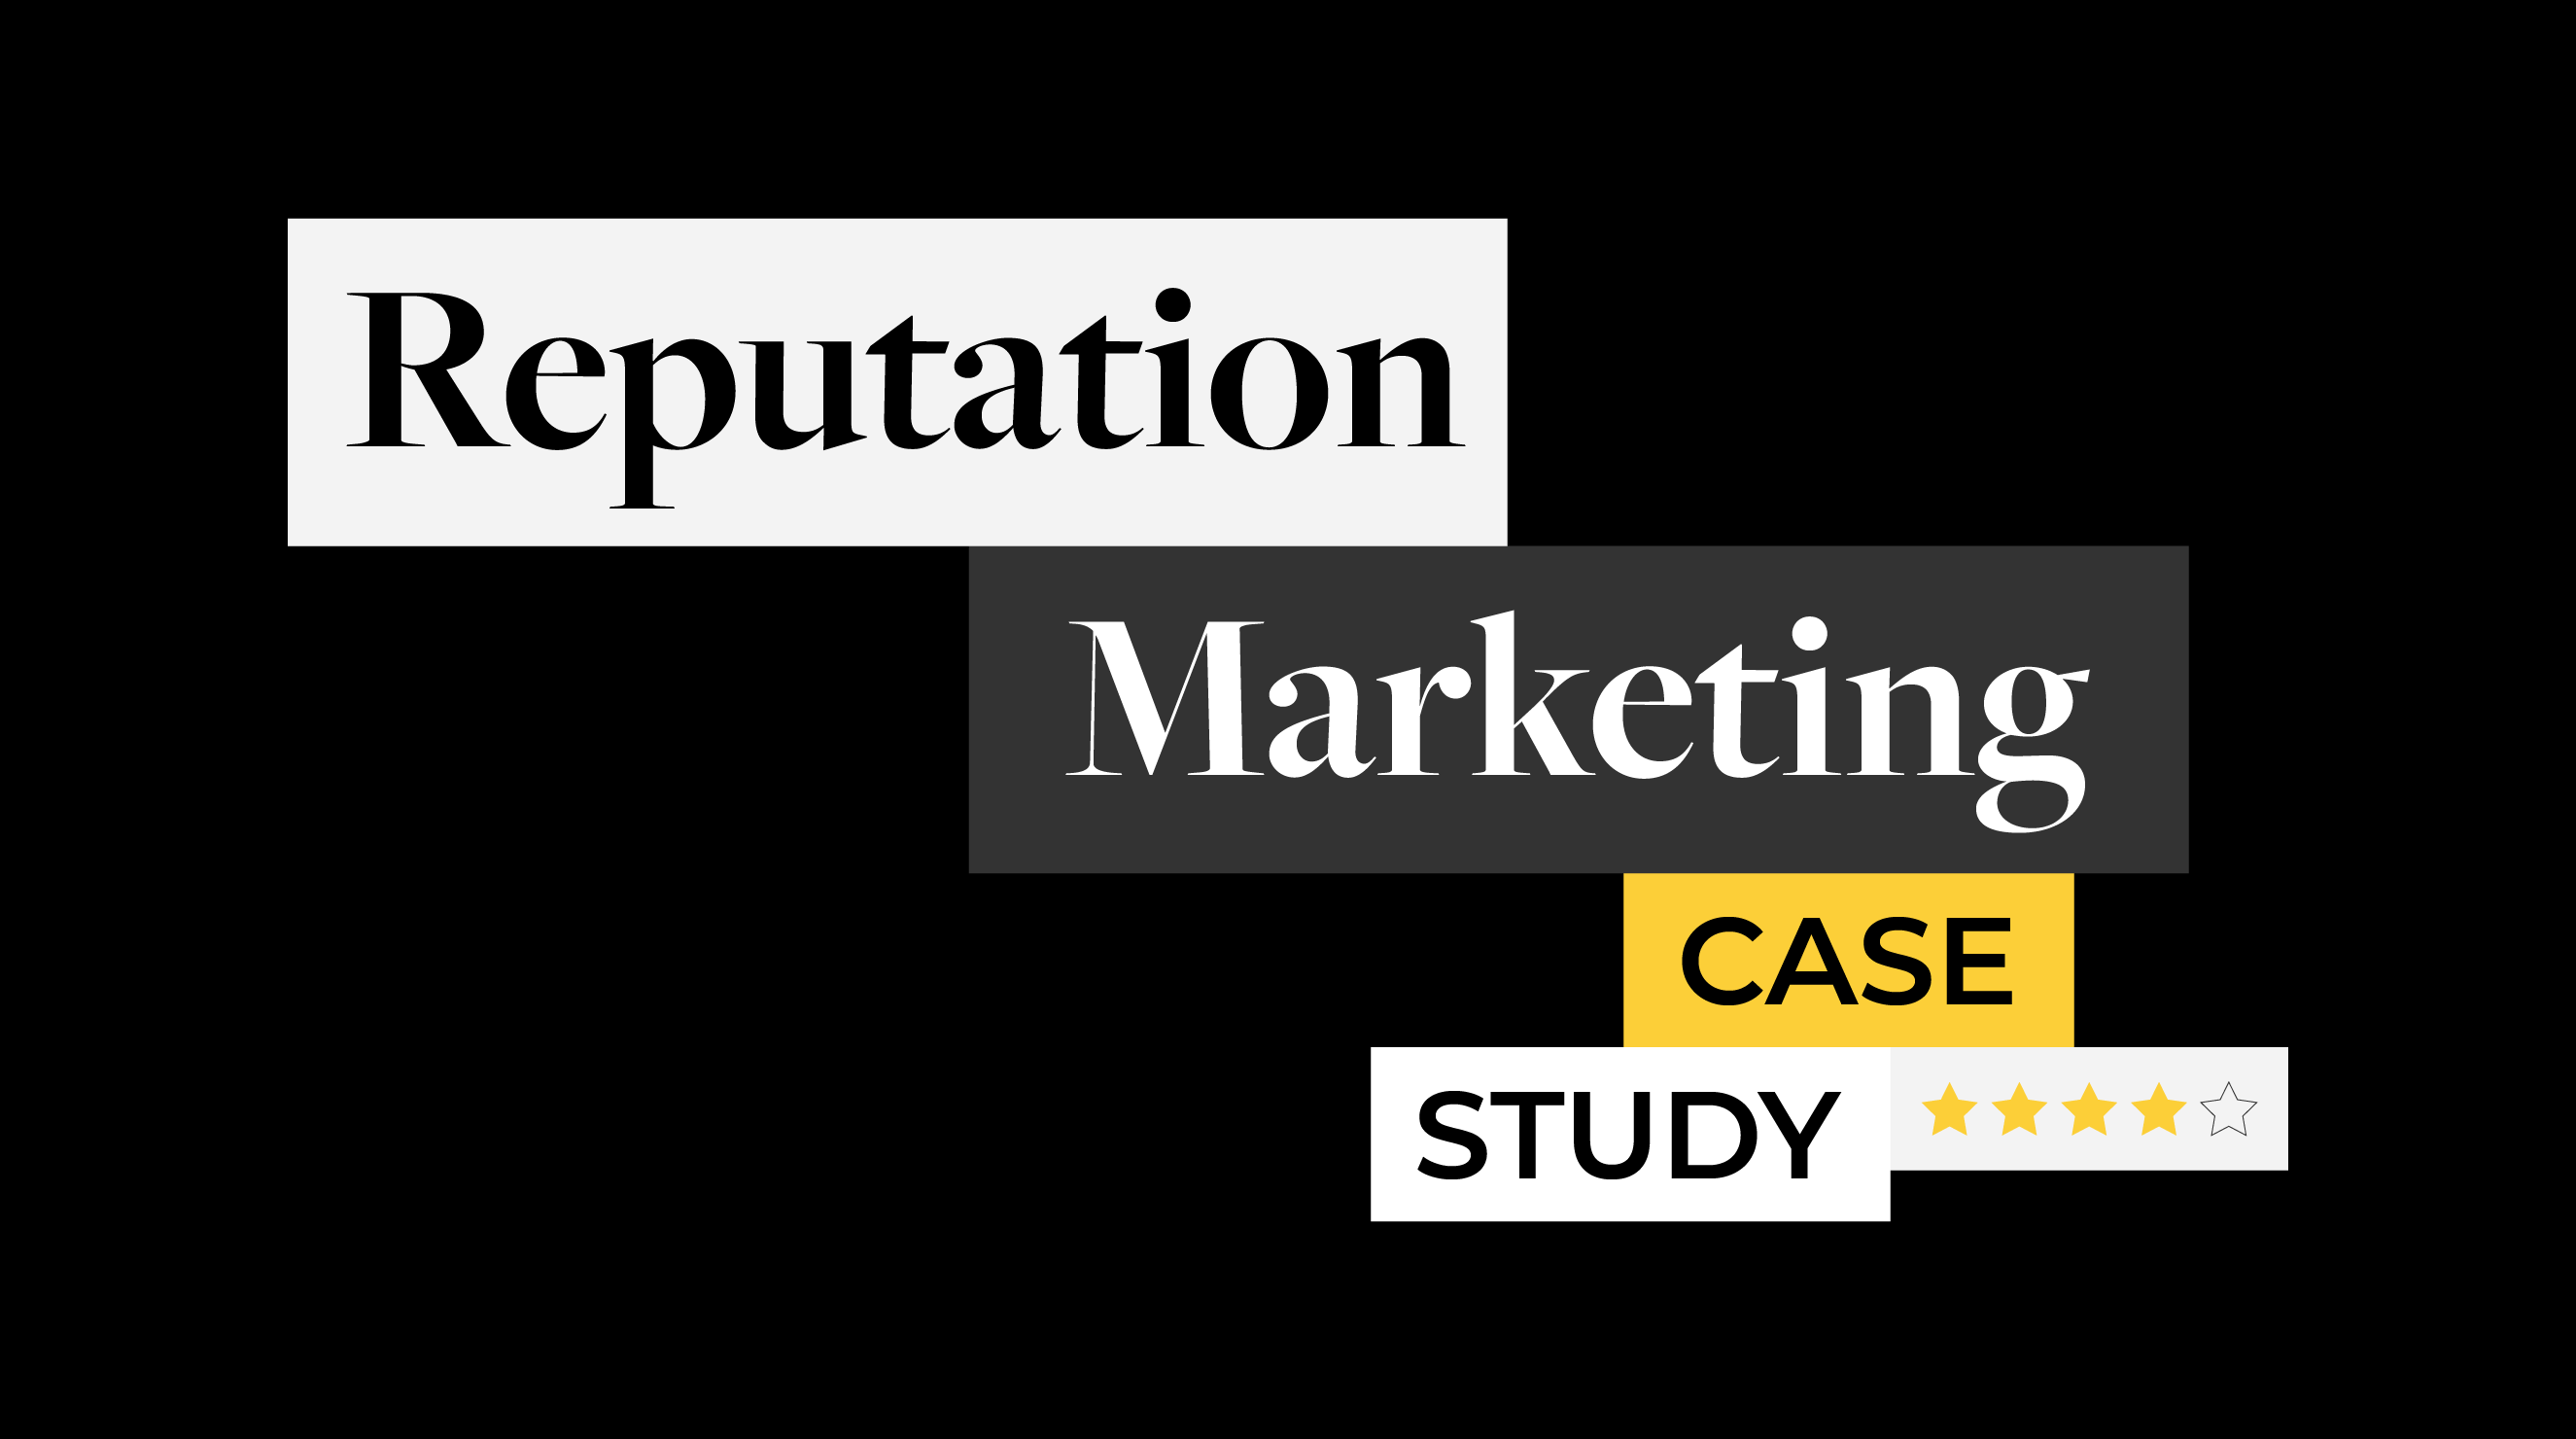 Reputation Marketing Case Study from GTMA